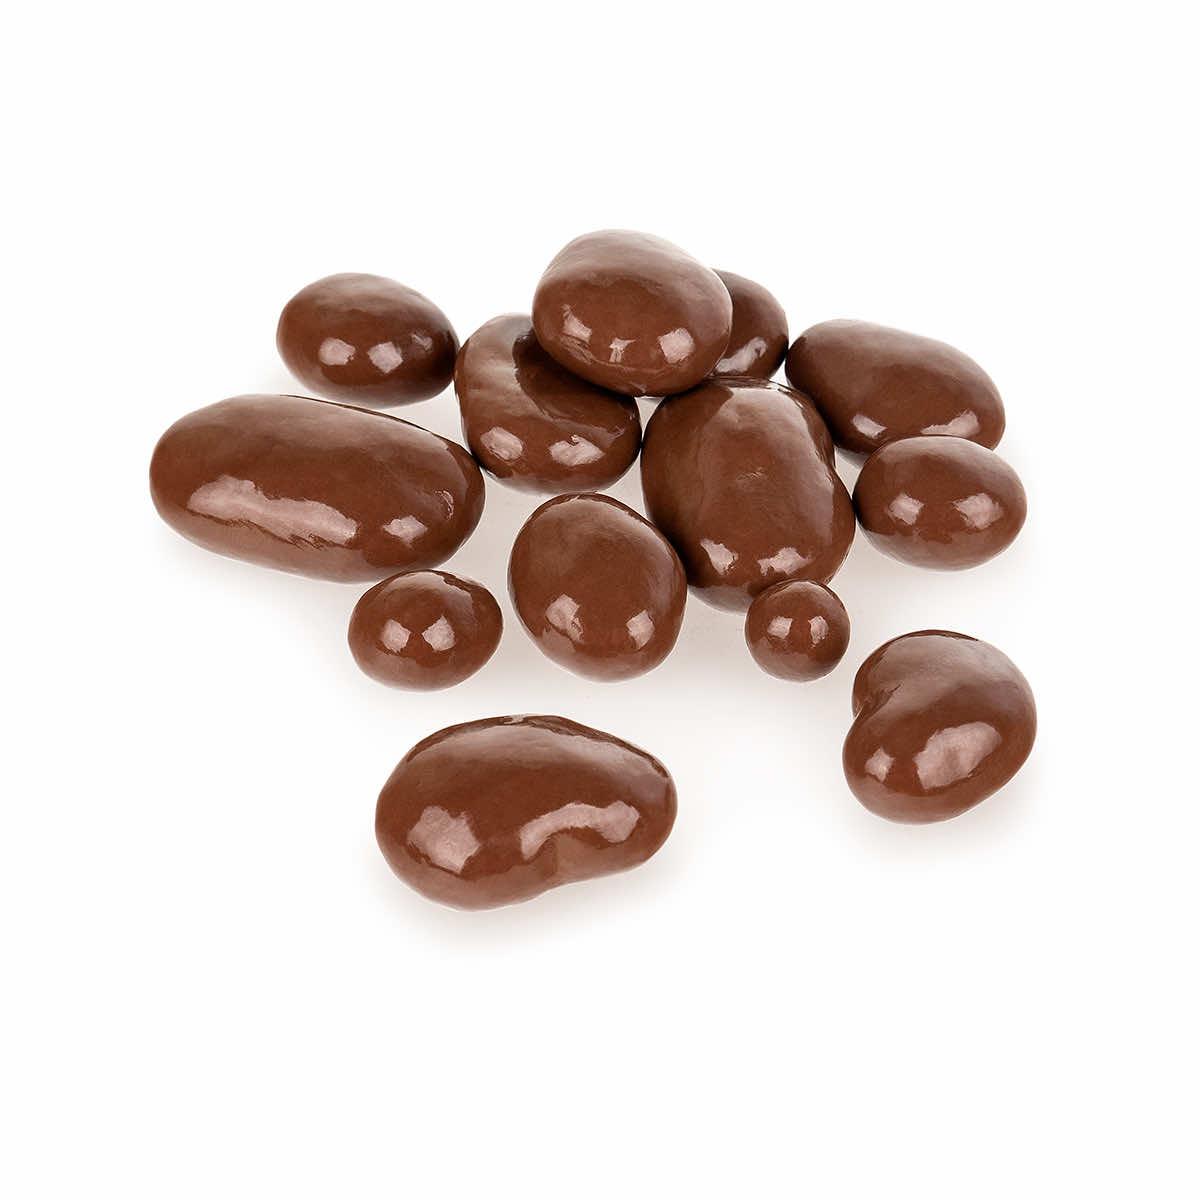  Milk Chocolate Pecans Candy - 1 Lb.